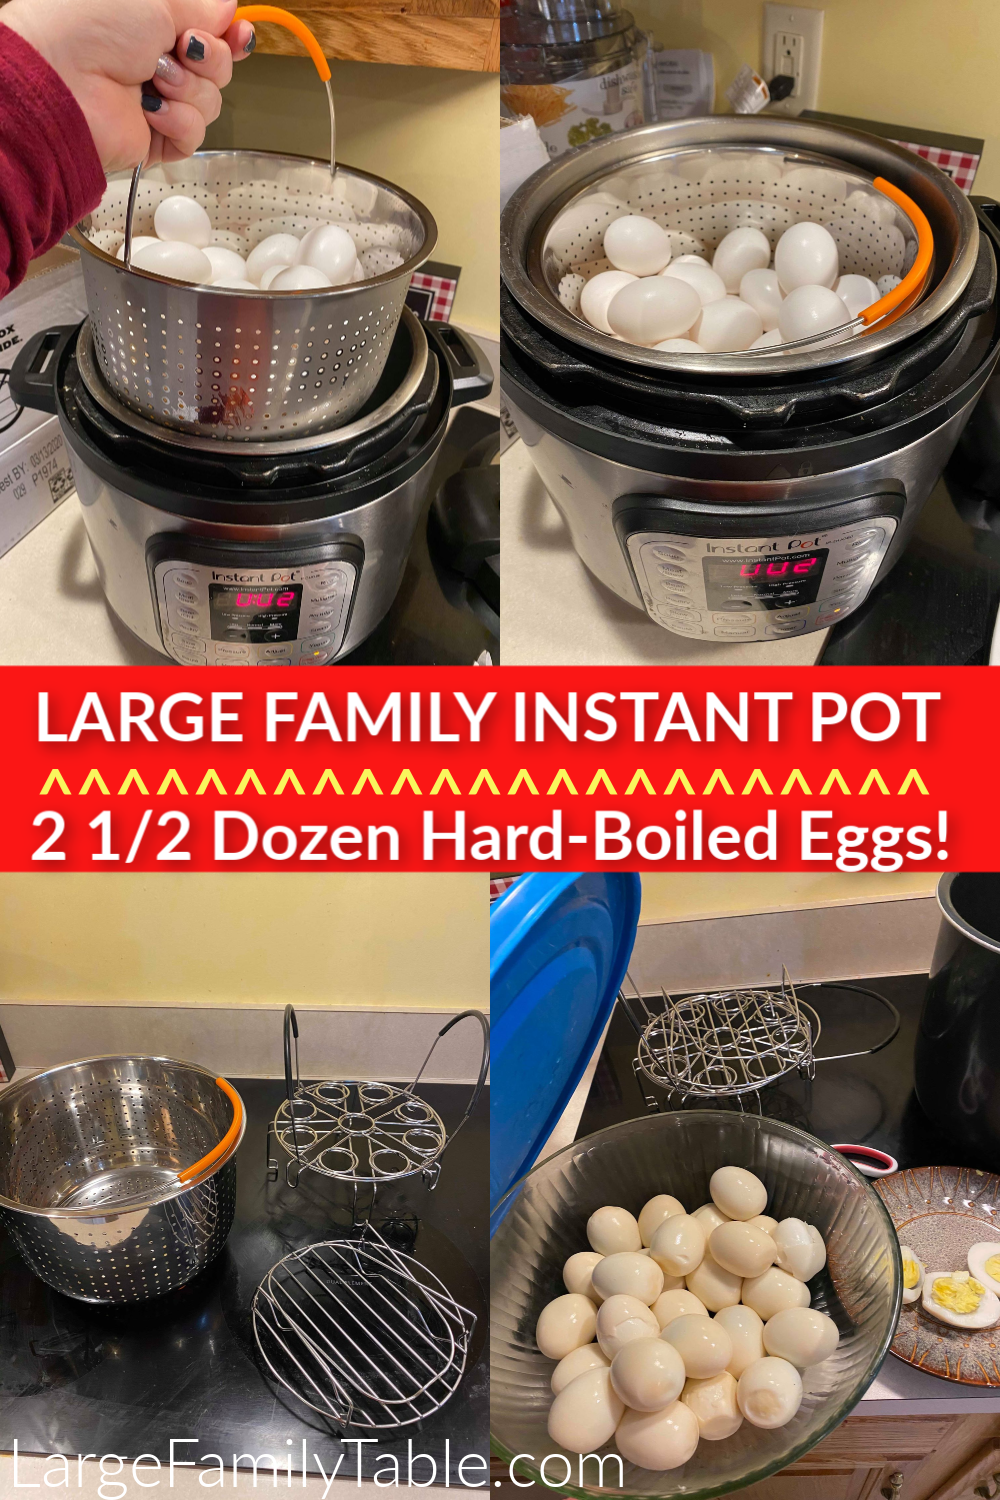 https://largefamilytable.com/wp-content/uploads/2020/02/Large-Family-Instant-Pot-Hard-Boiled-Eggs.png